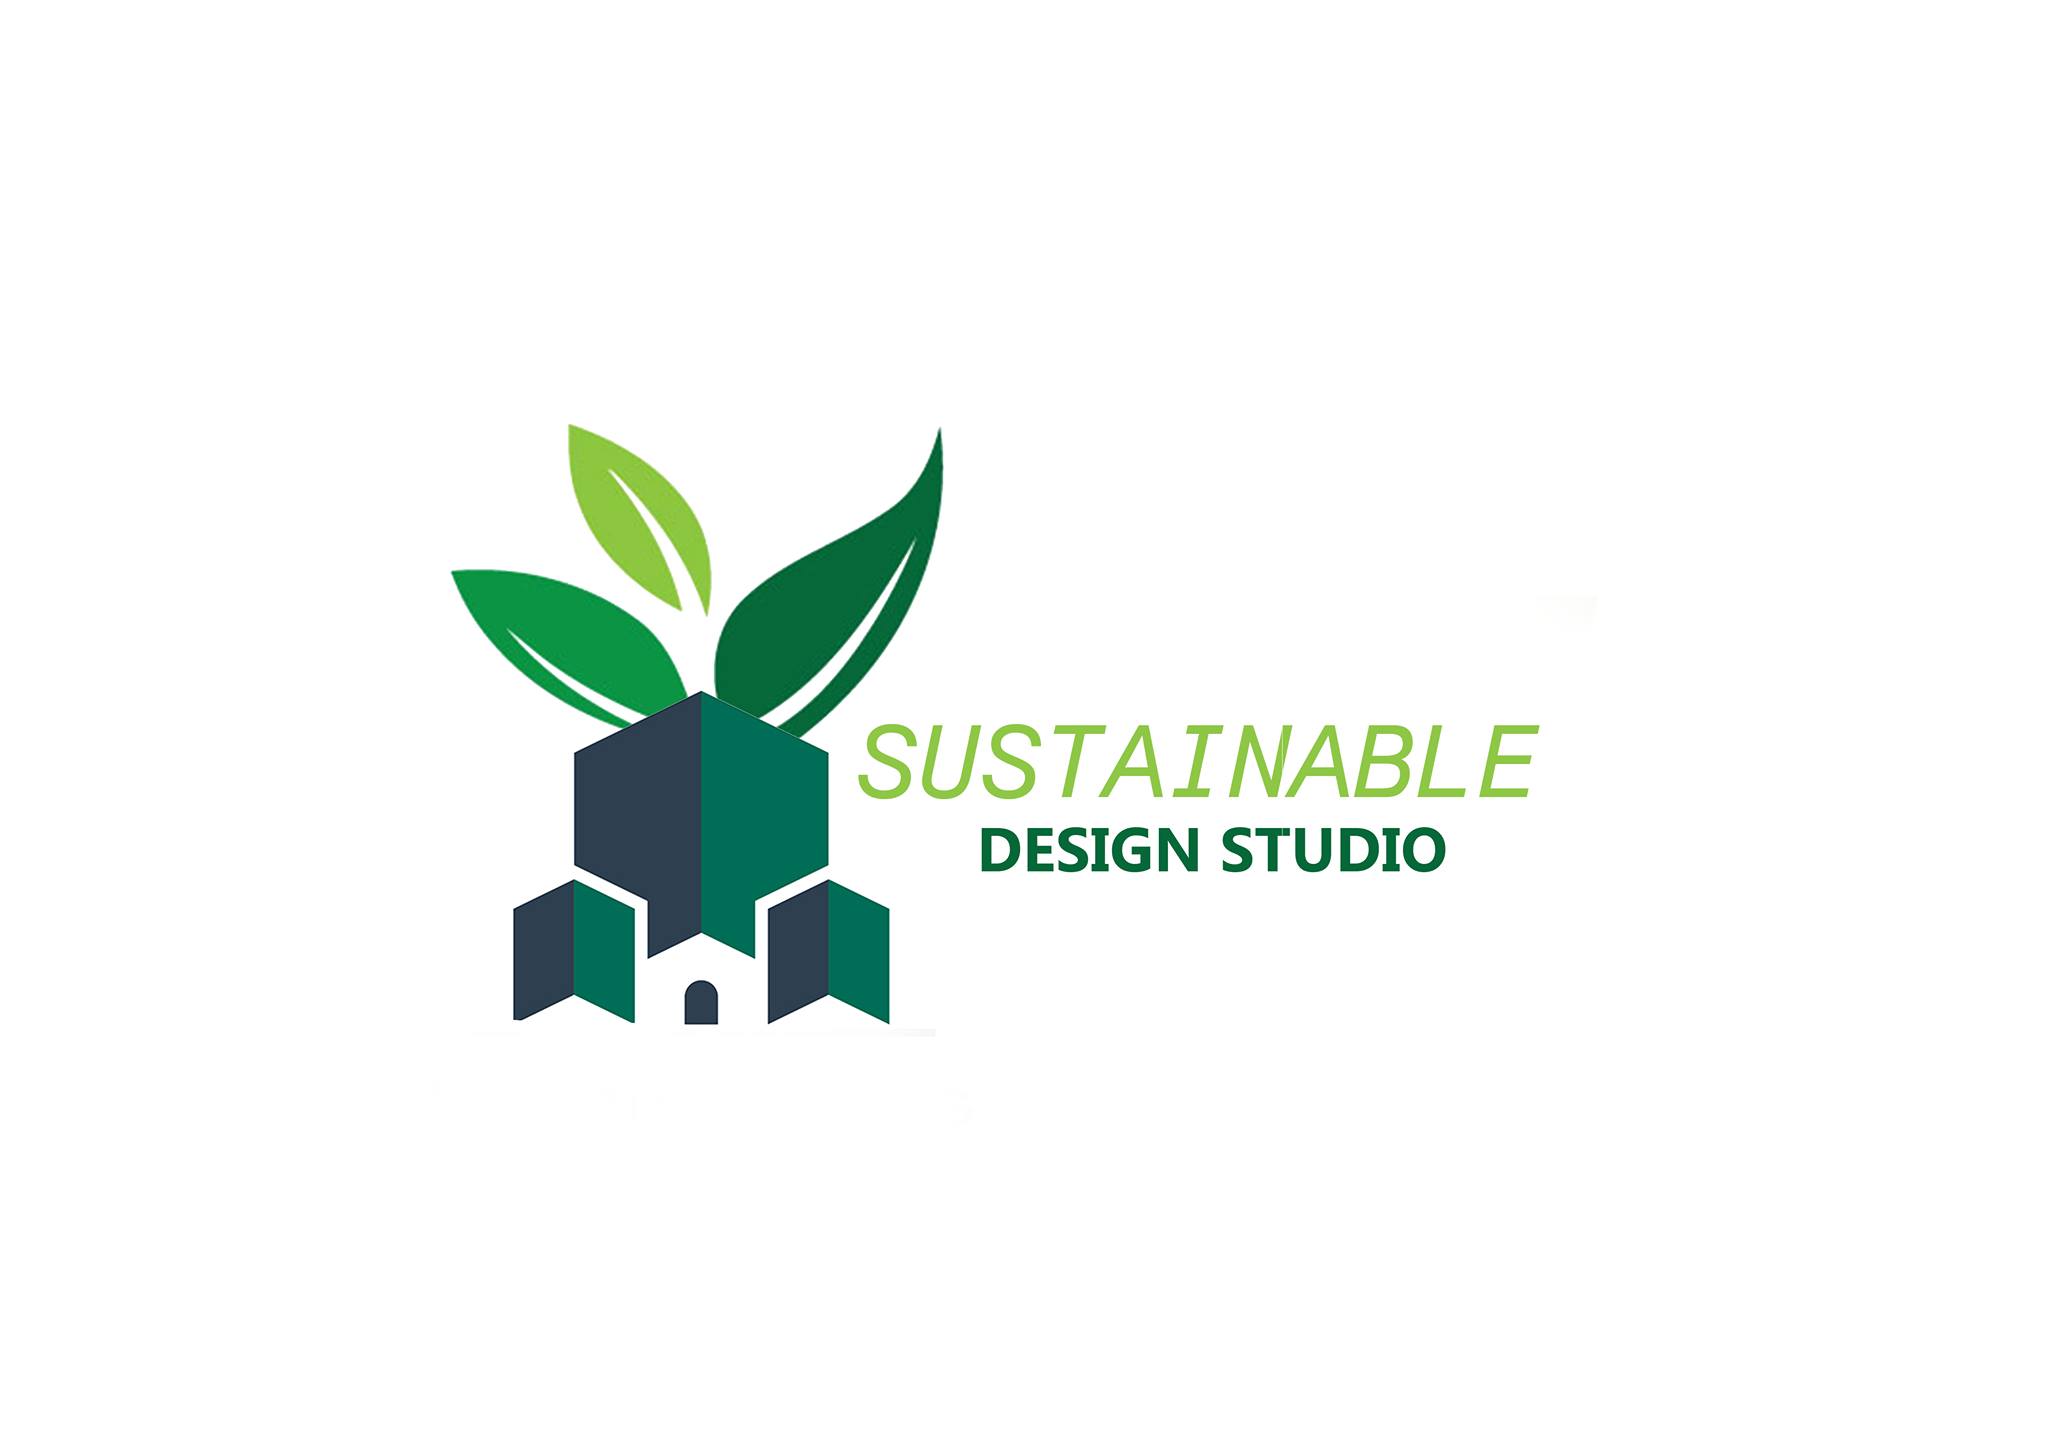 Sustainable design studio|Property Management|Professional Services